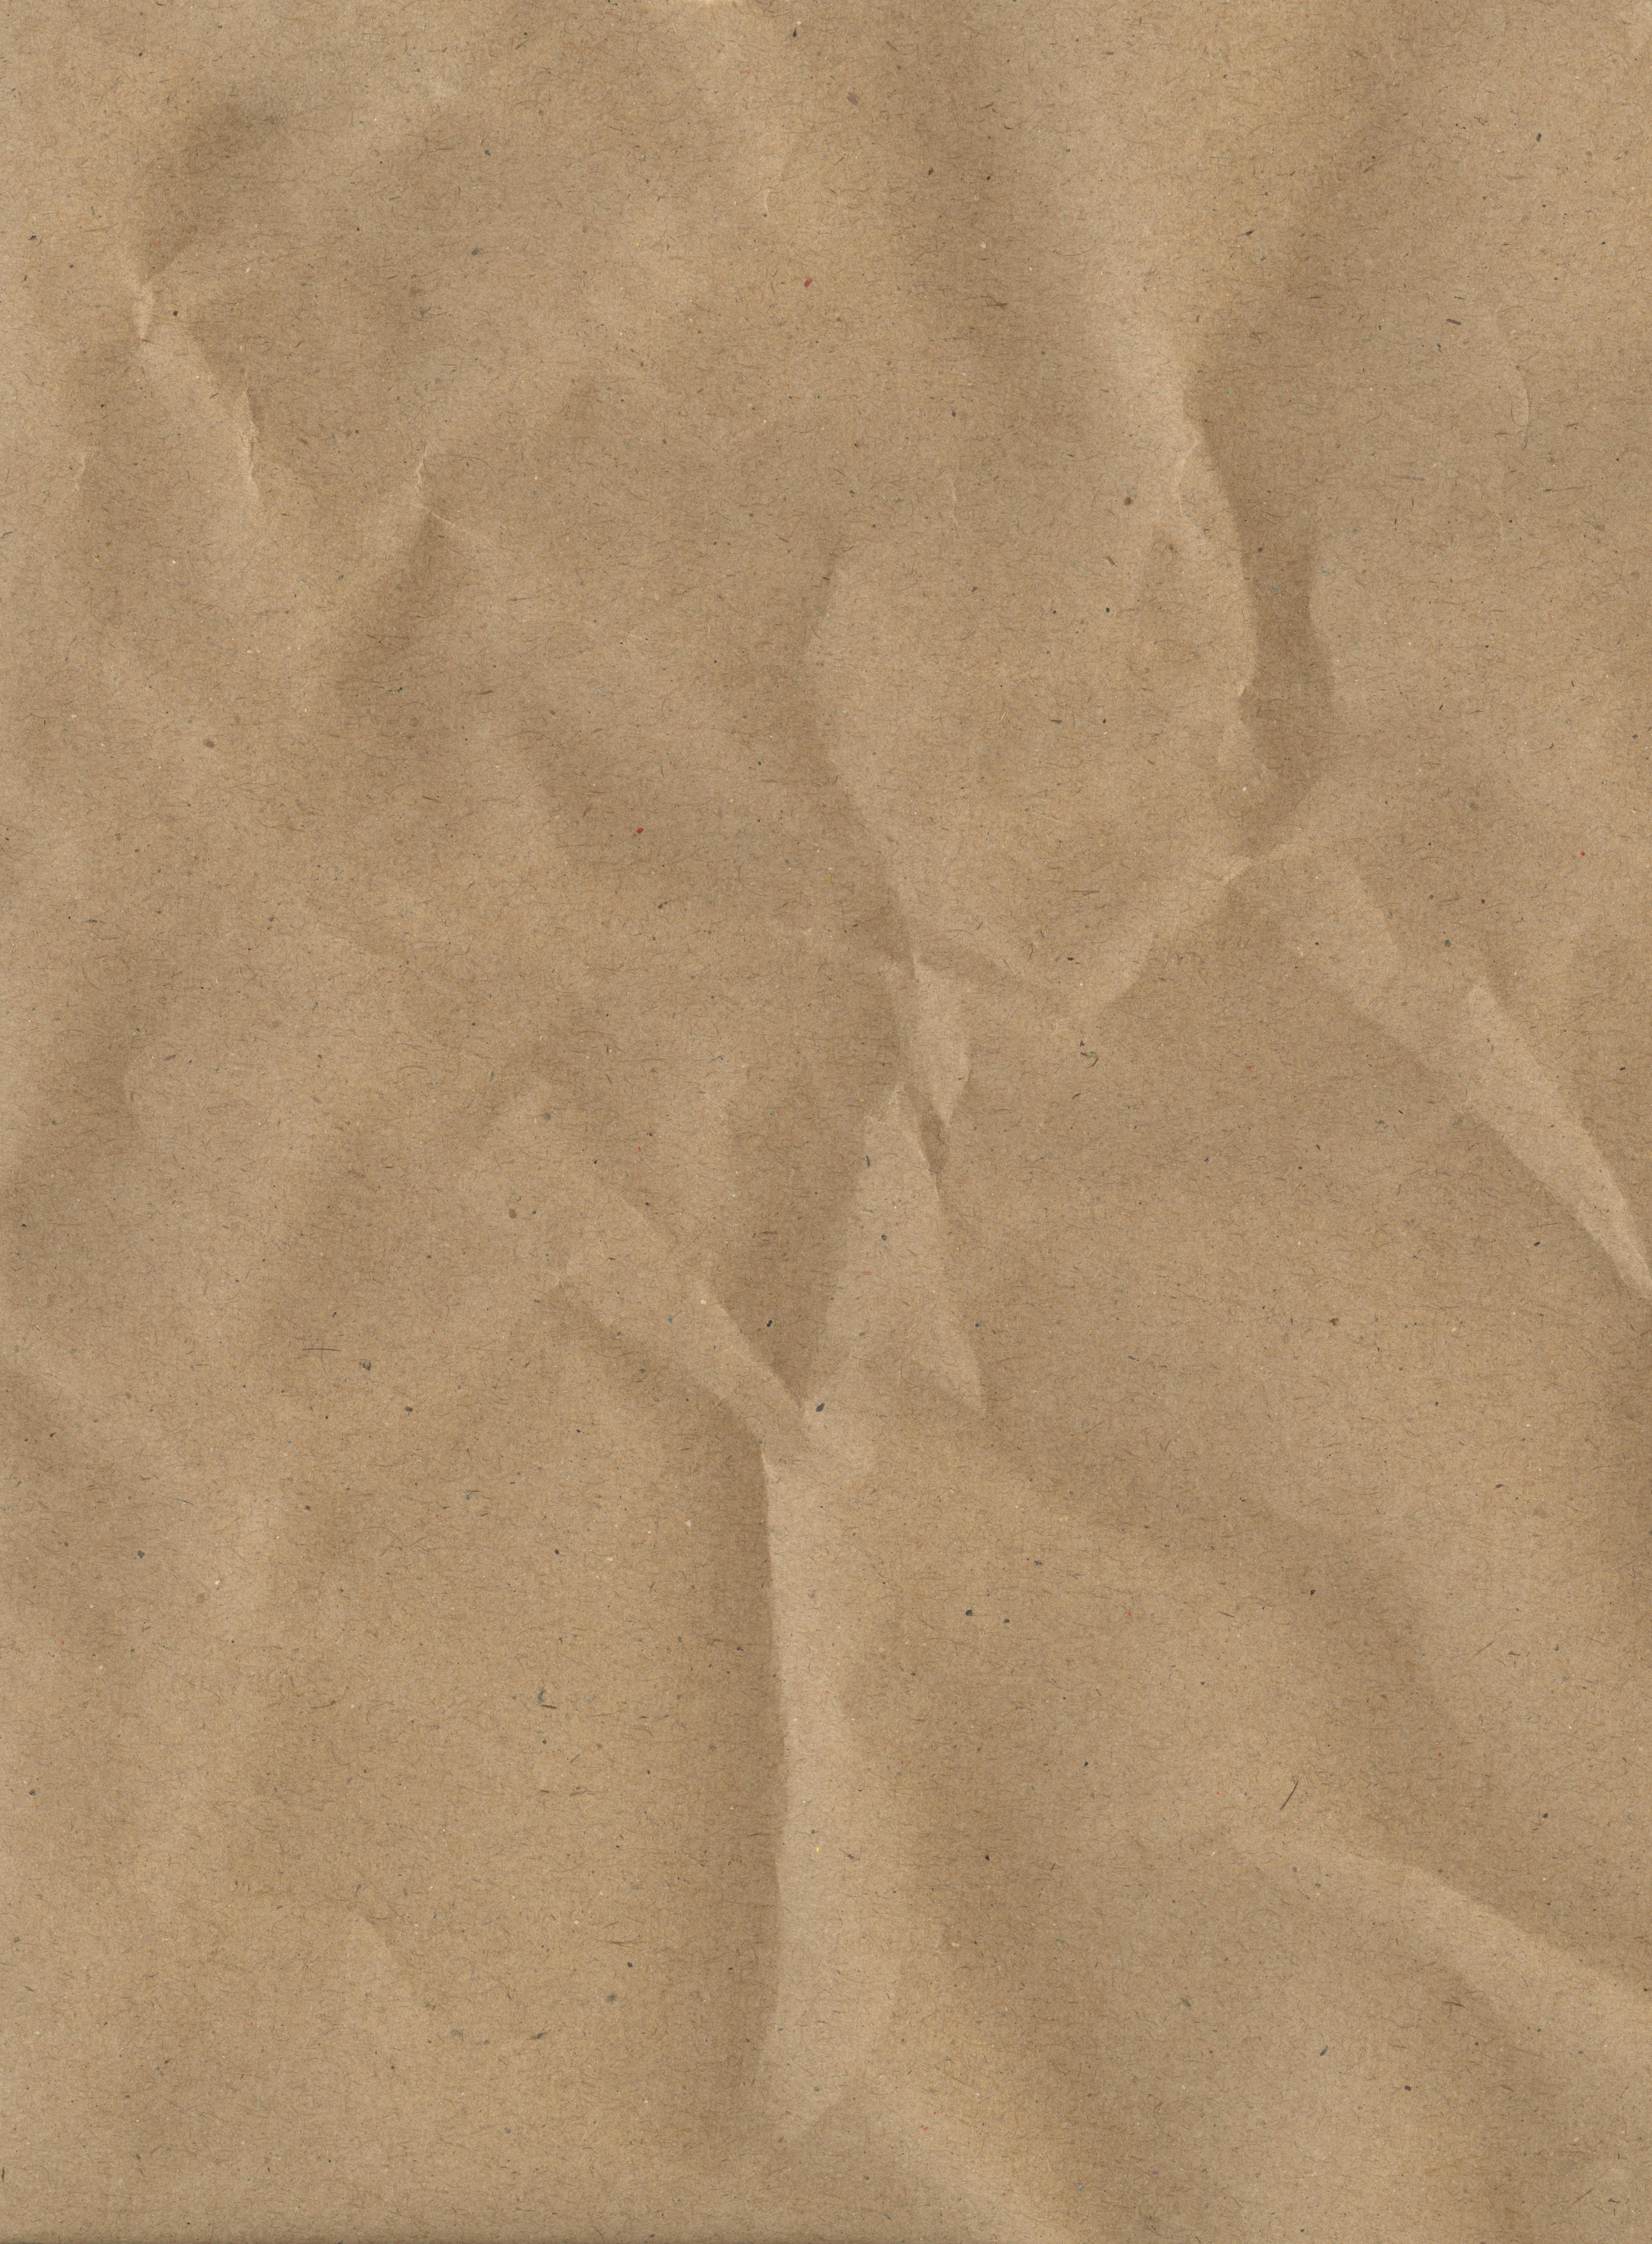 50 Free Kraft Paper Textures [4K / 8K Res] - Resource Boy